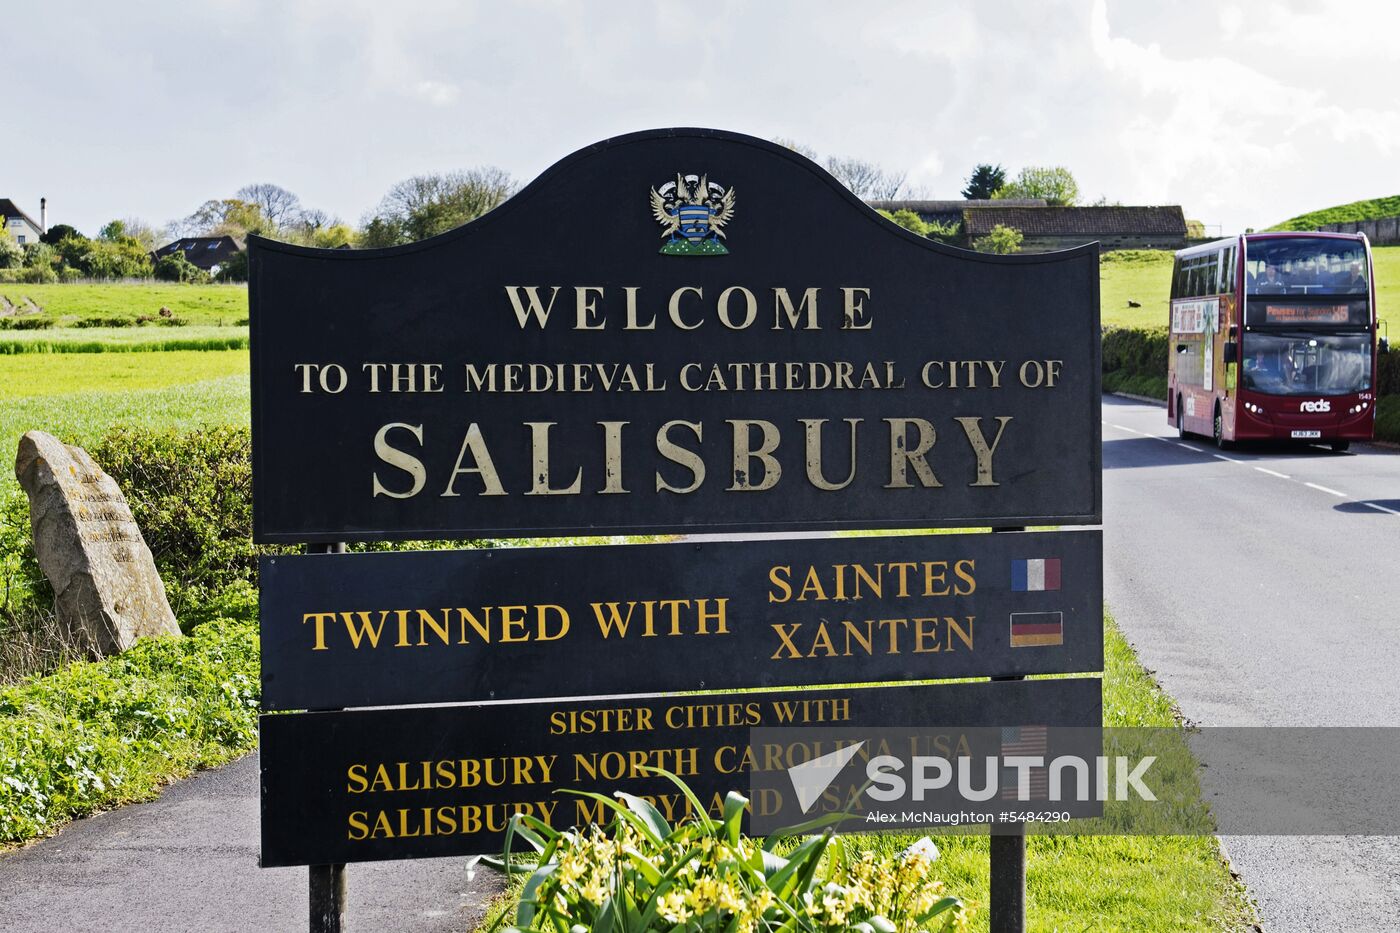 Clean-up begins in Salisbury following Skripal poisoning